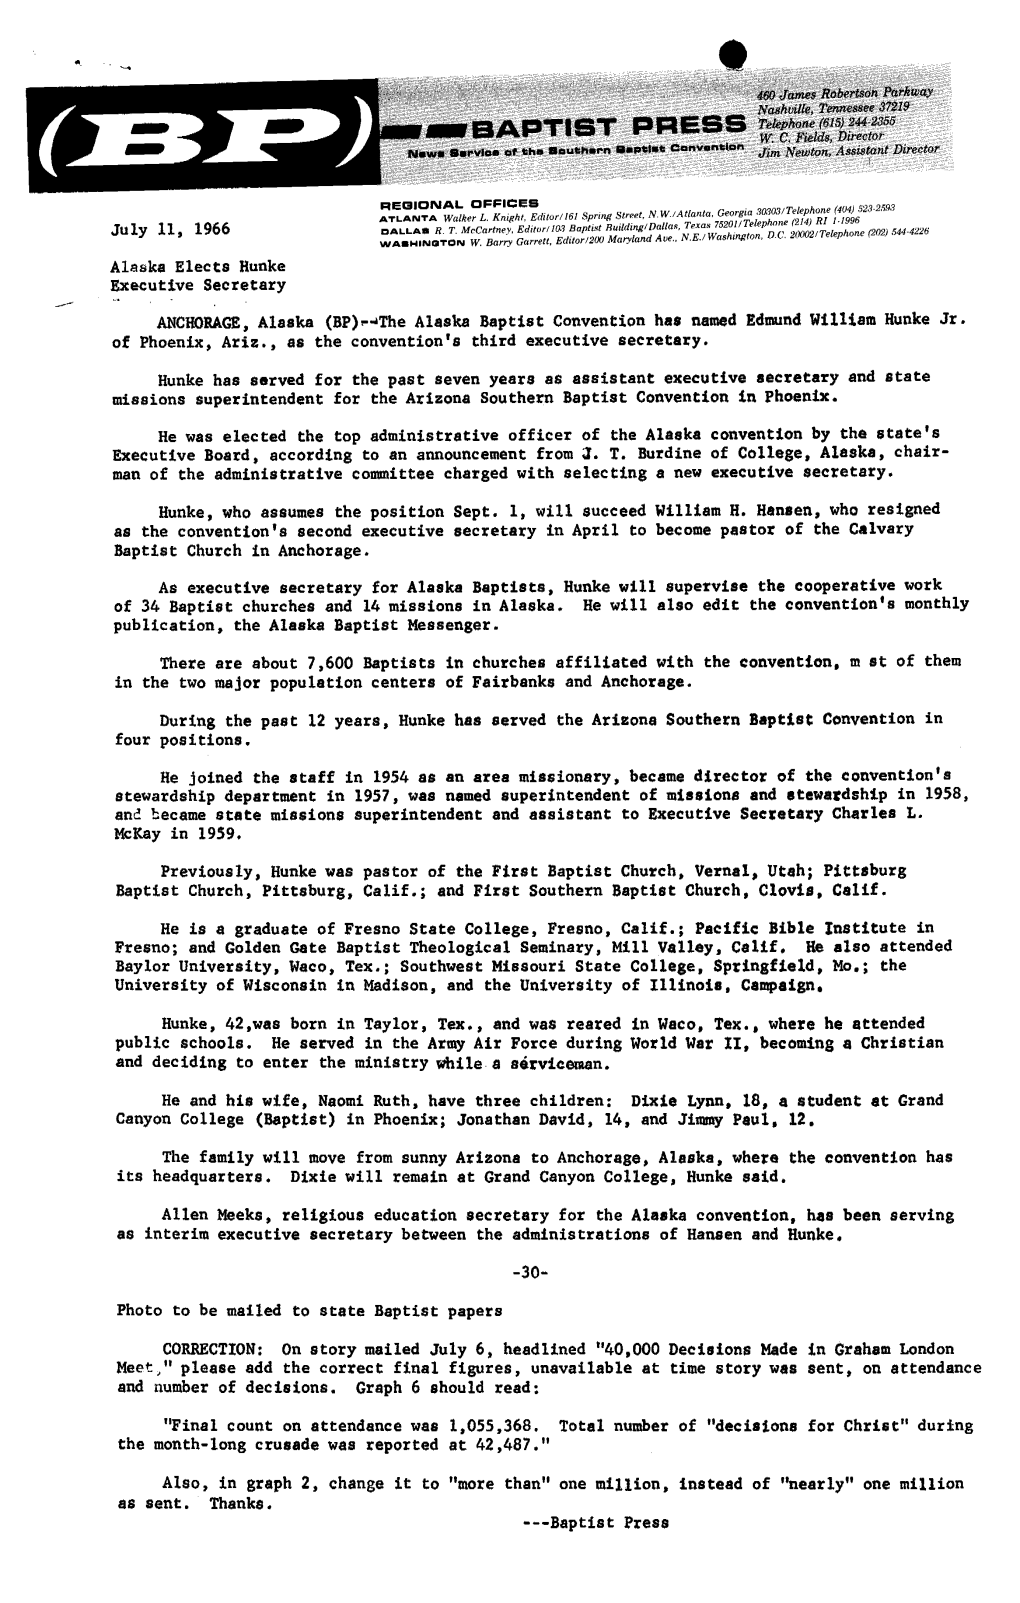 July 11, 1966 Alaska Elects Hunke Executive Secretary